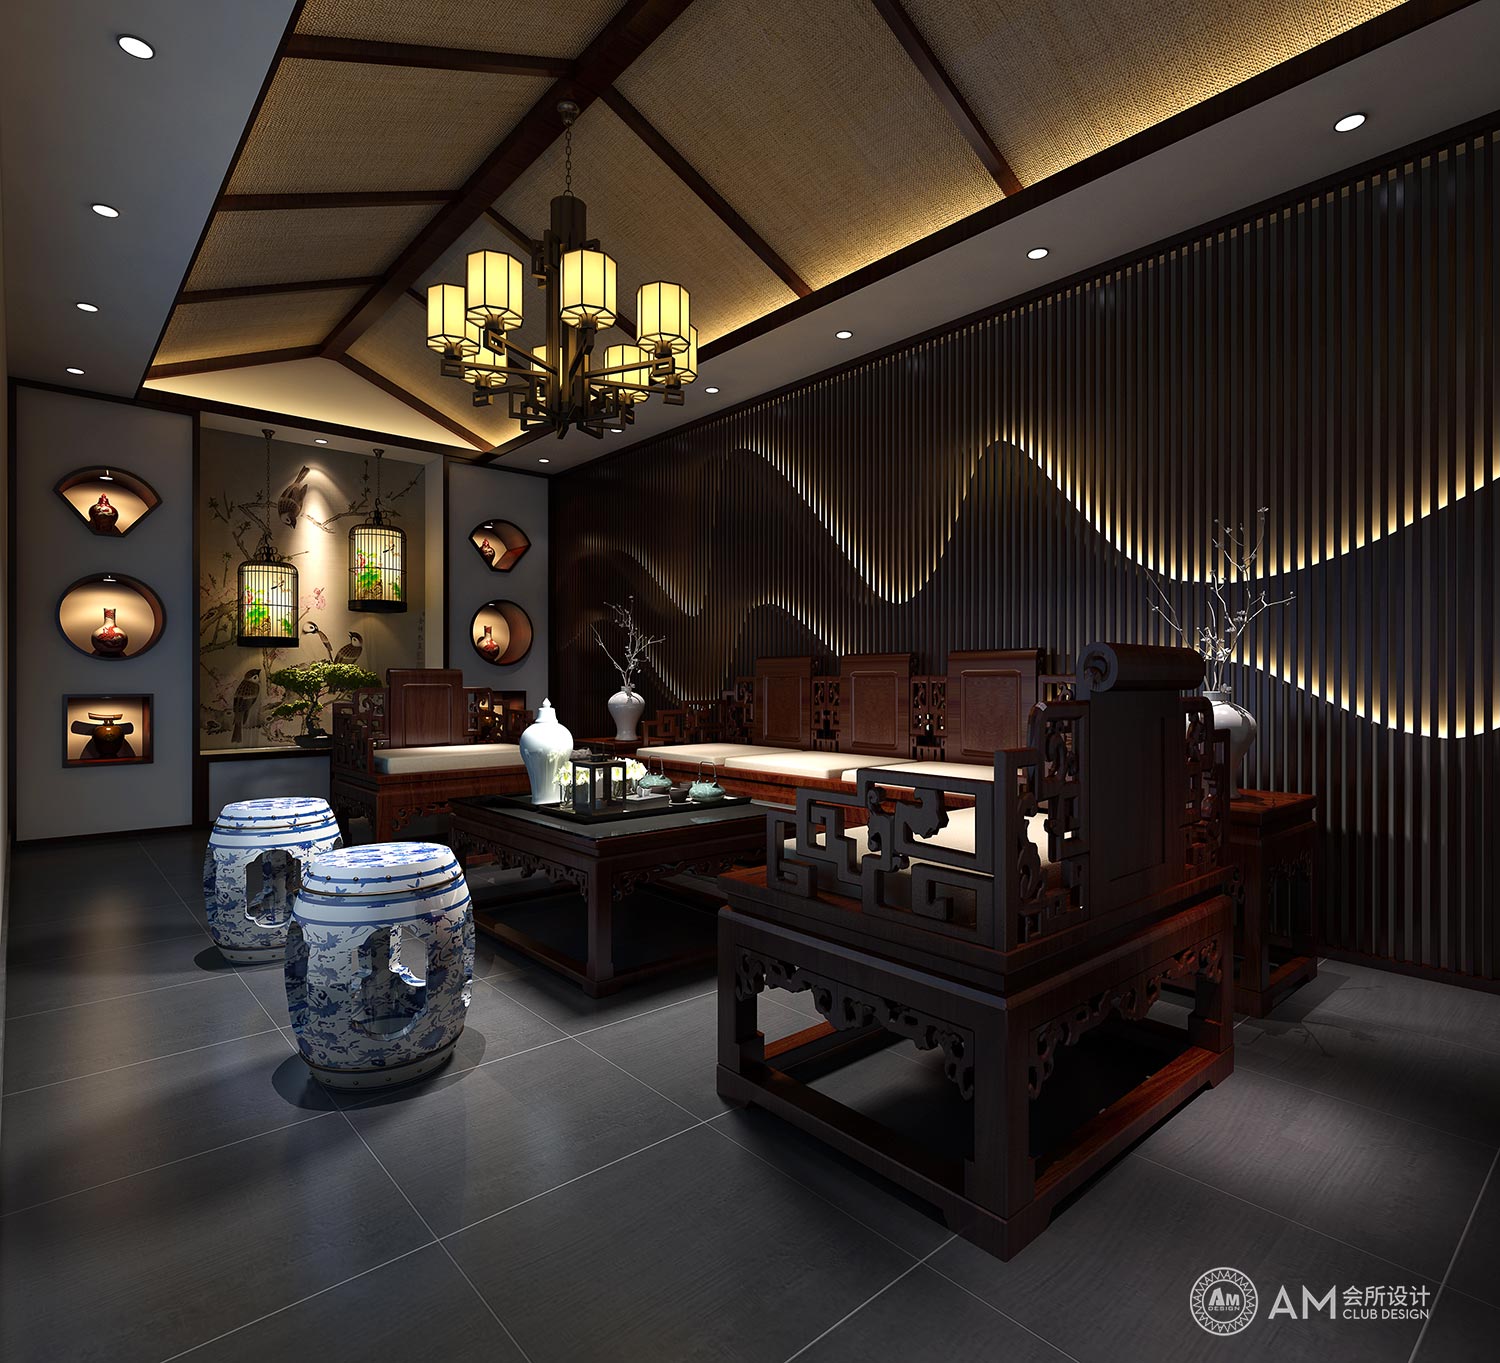 AM DESIGN | Design of qilinhui Top Spa Club rest area